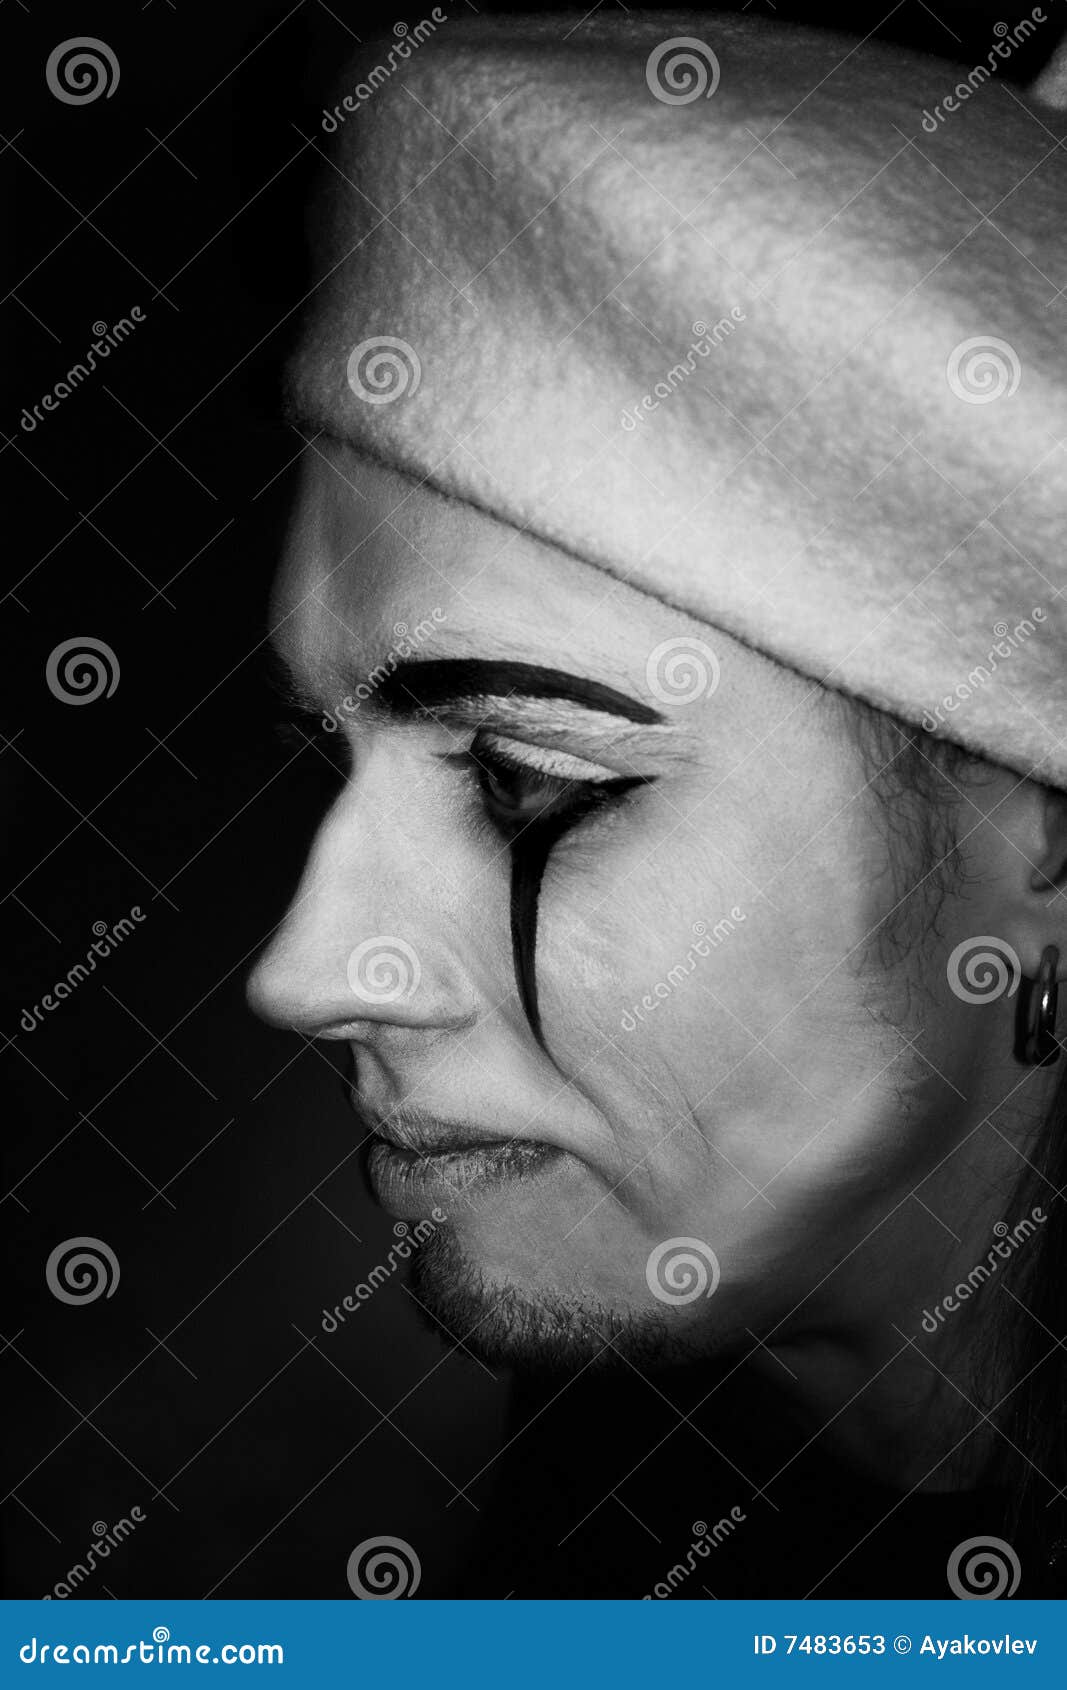 Sad Man With White Face Stock Photos - Image: 7483653